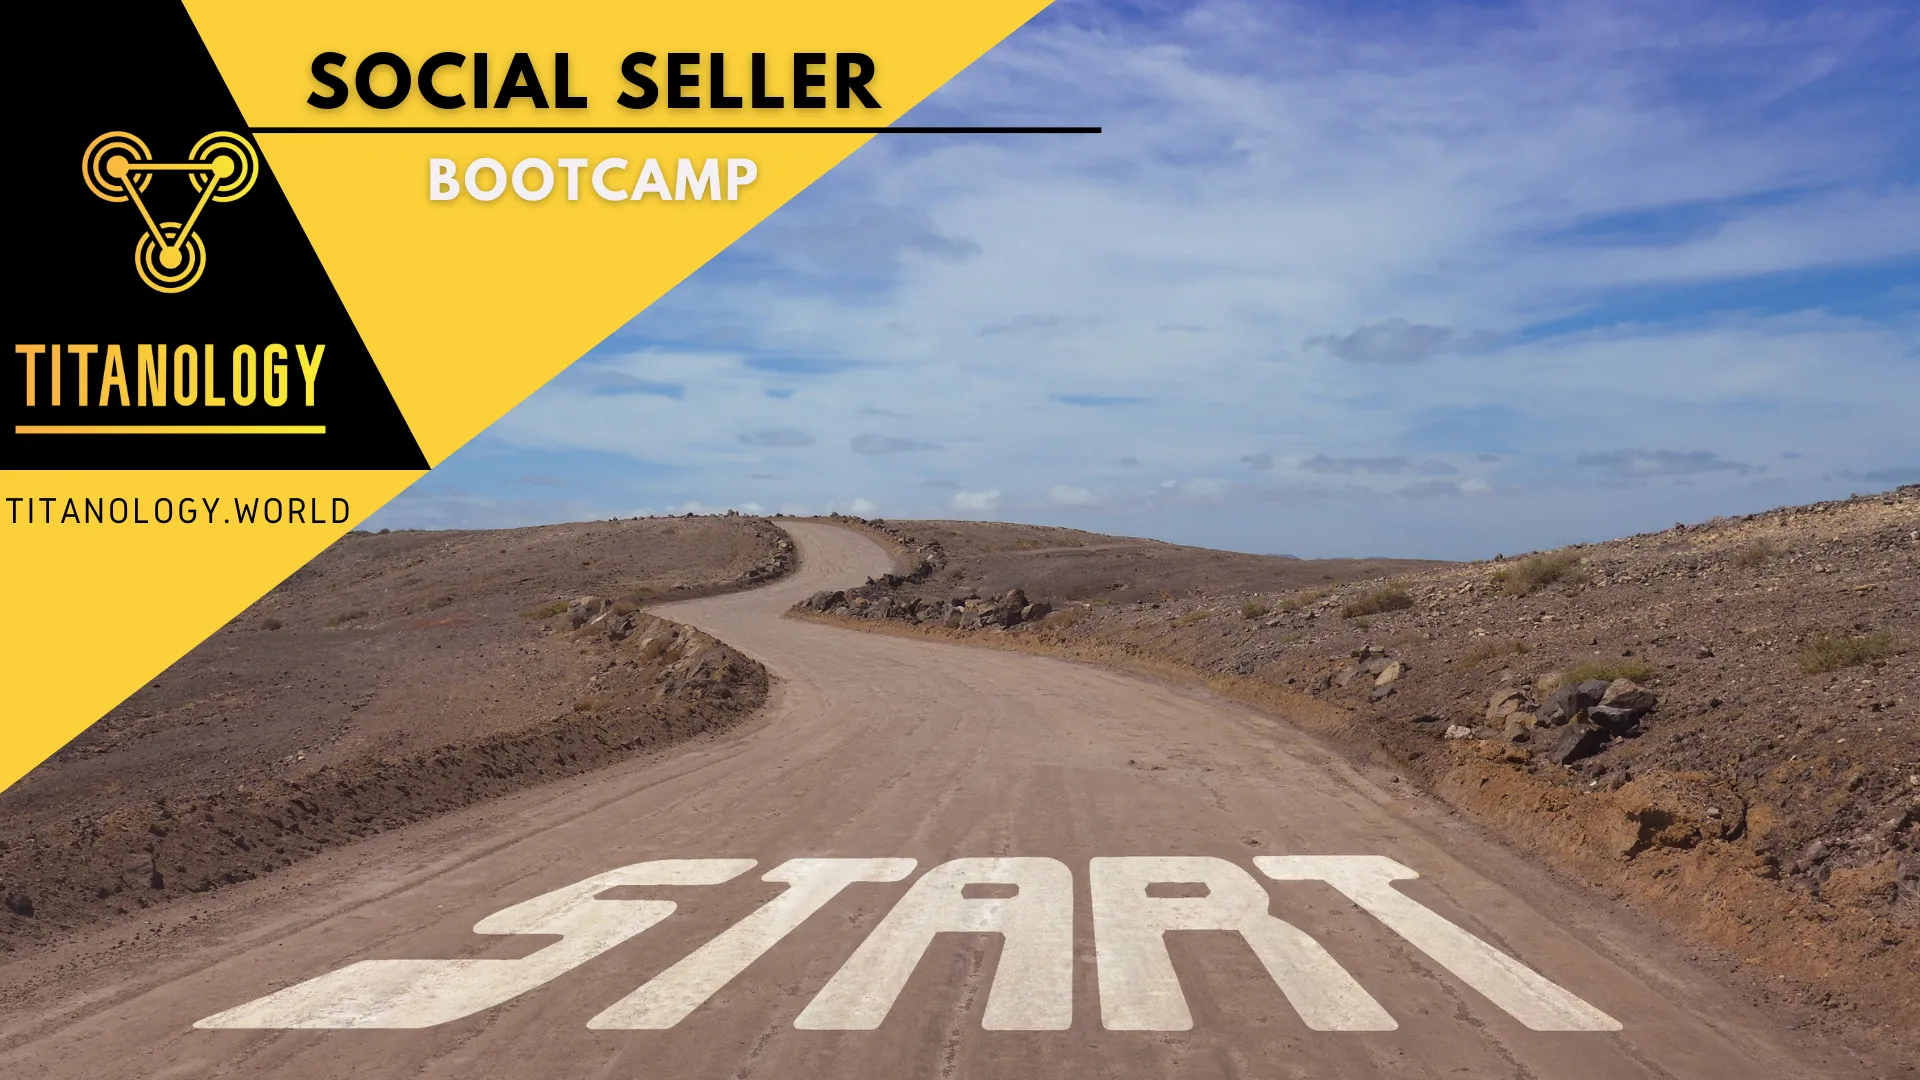 Social seller bootcamp